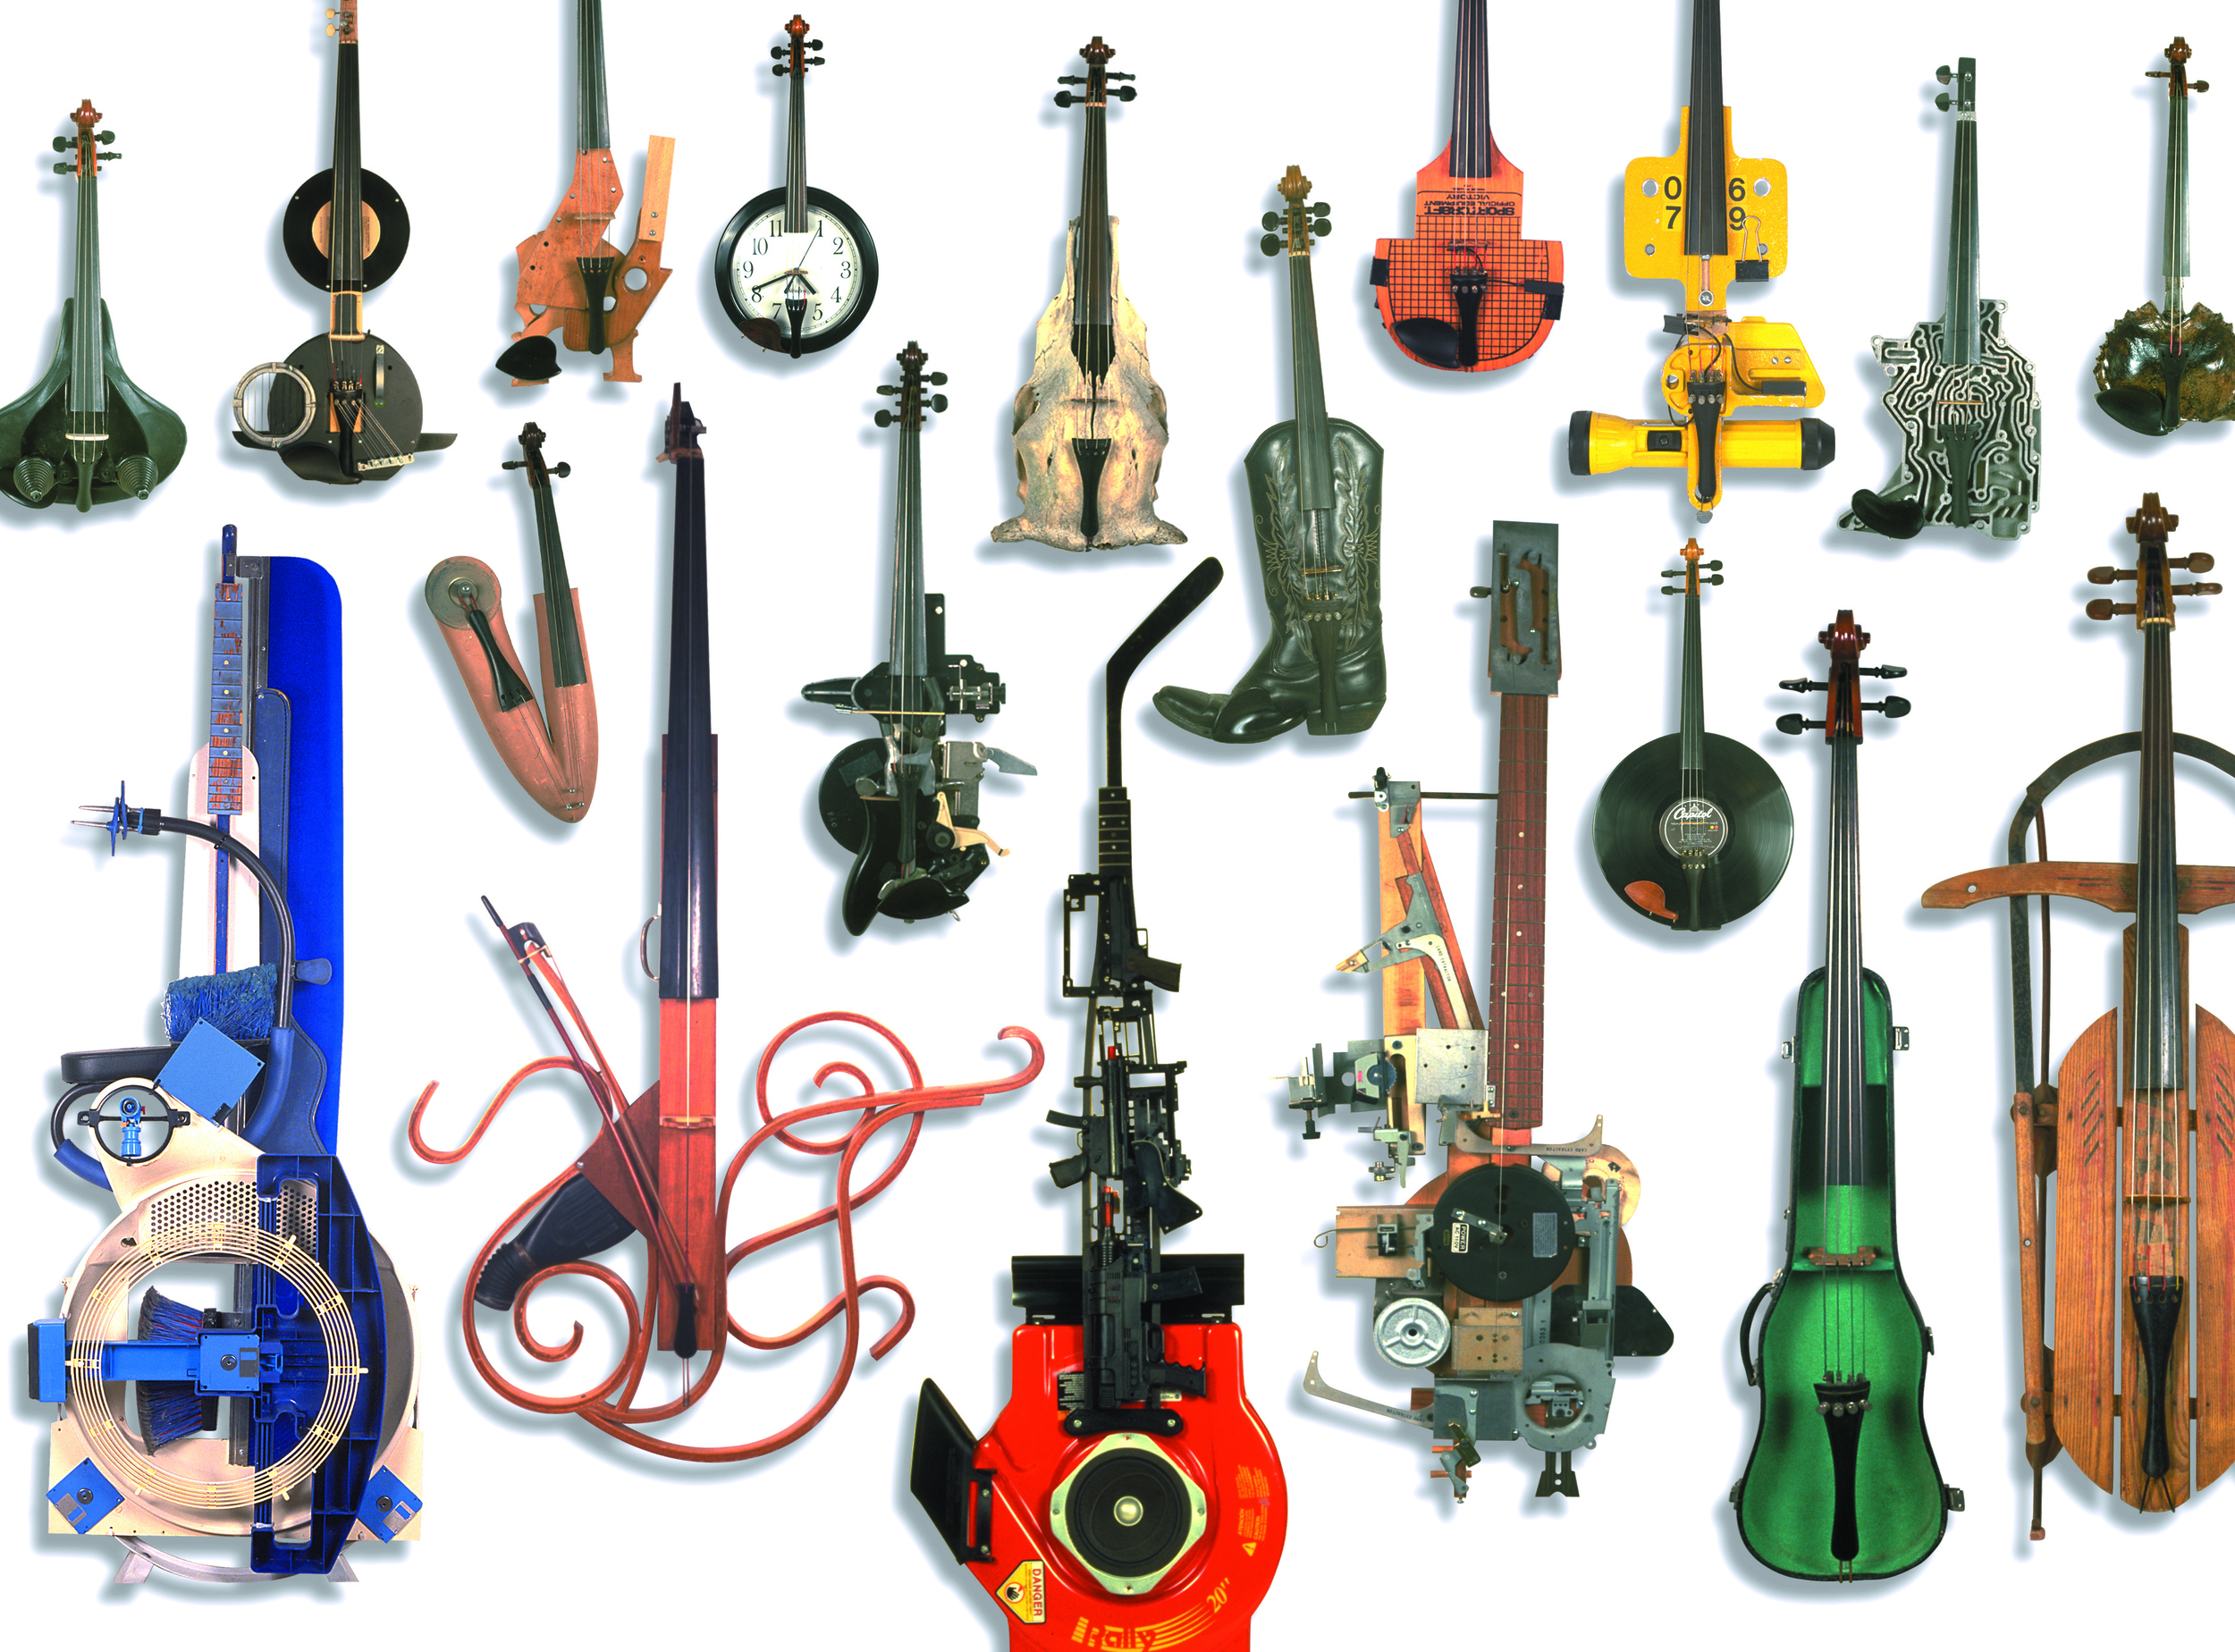 Tool now. Музыкальные инструменты. Необычные инструменты. Необычные музыкальные инструменты. Странные музыкальные инструменты.